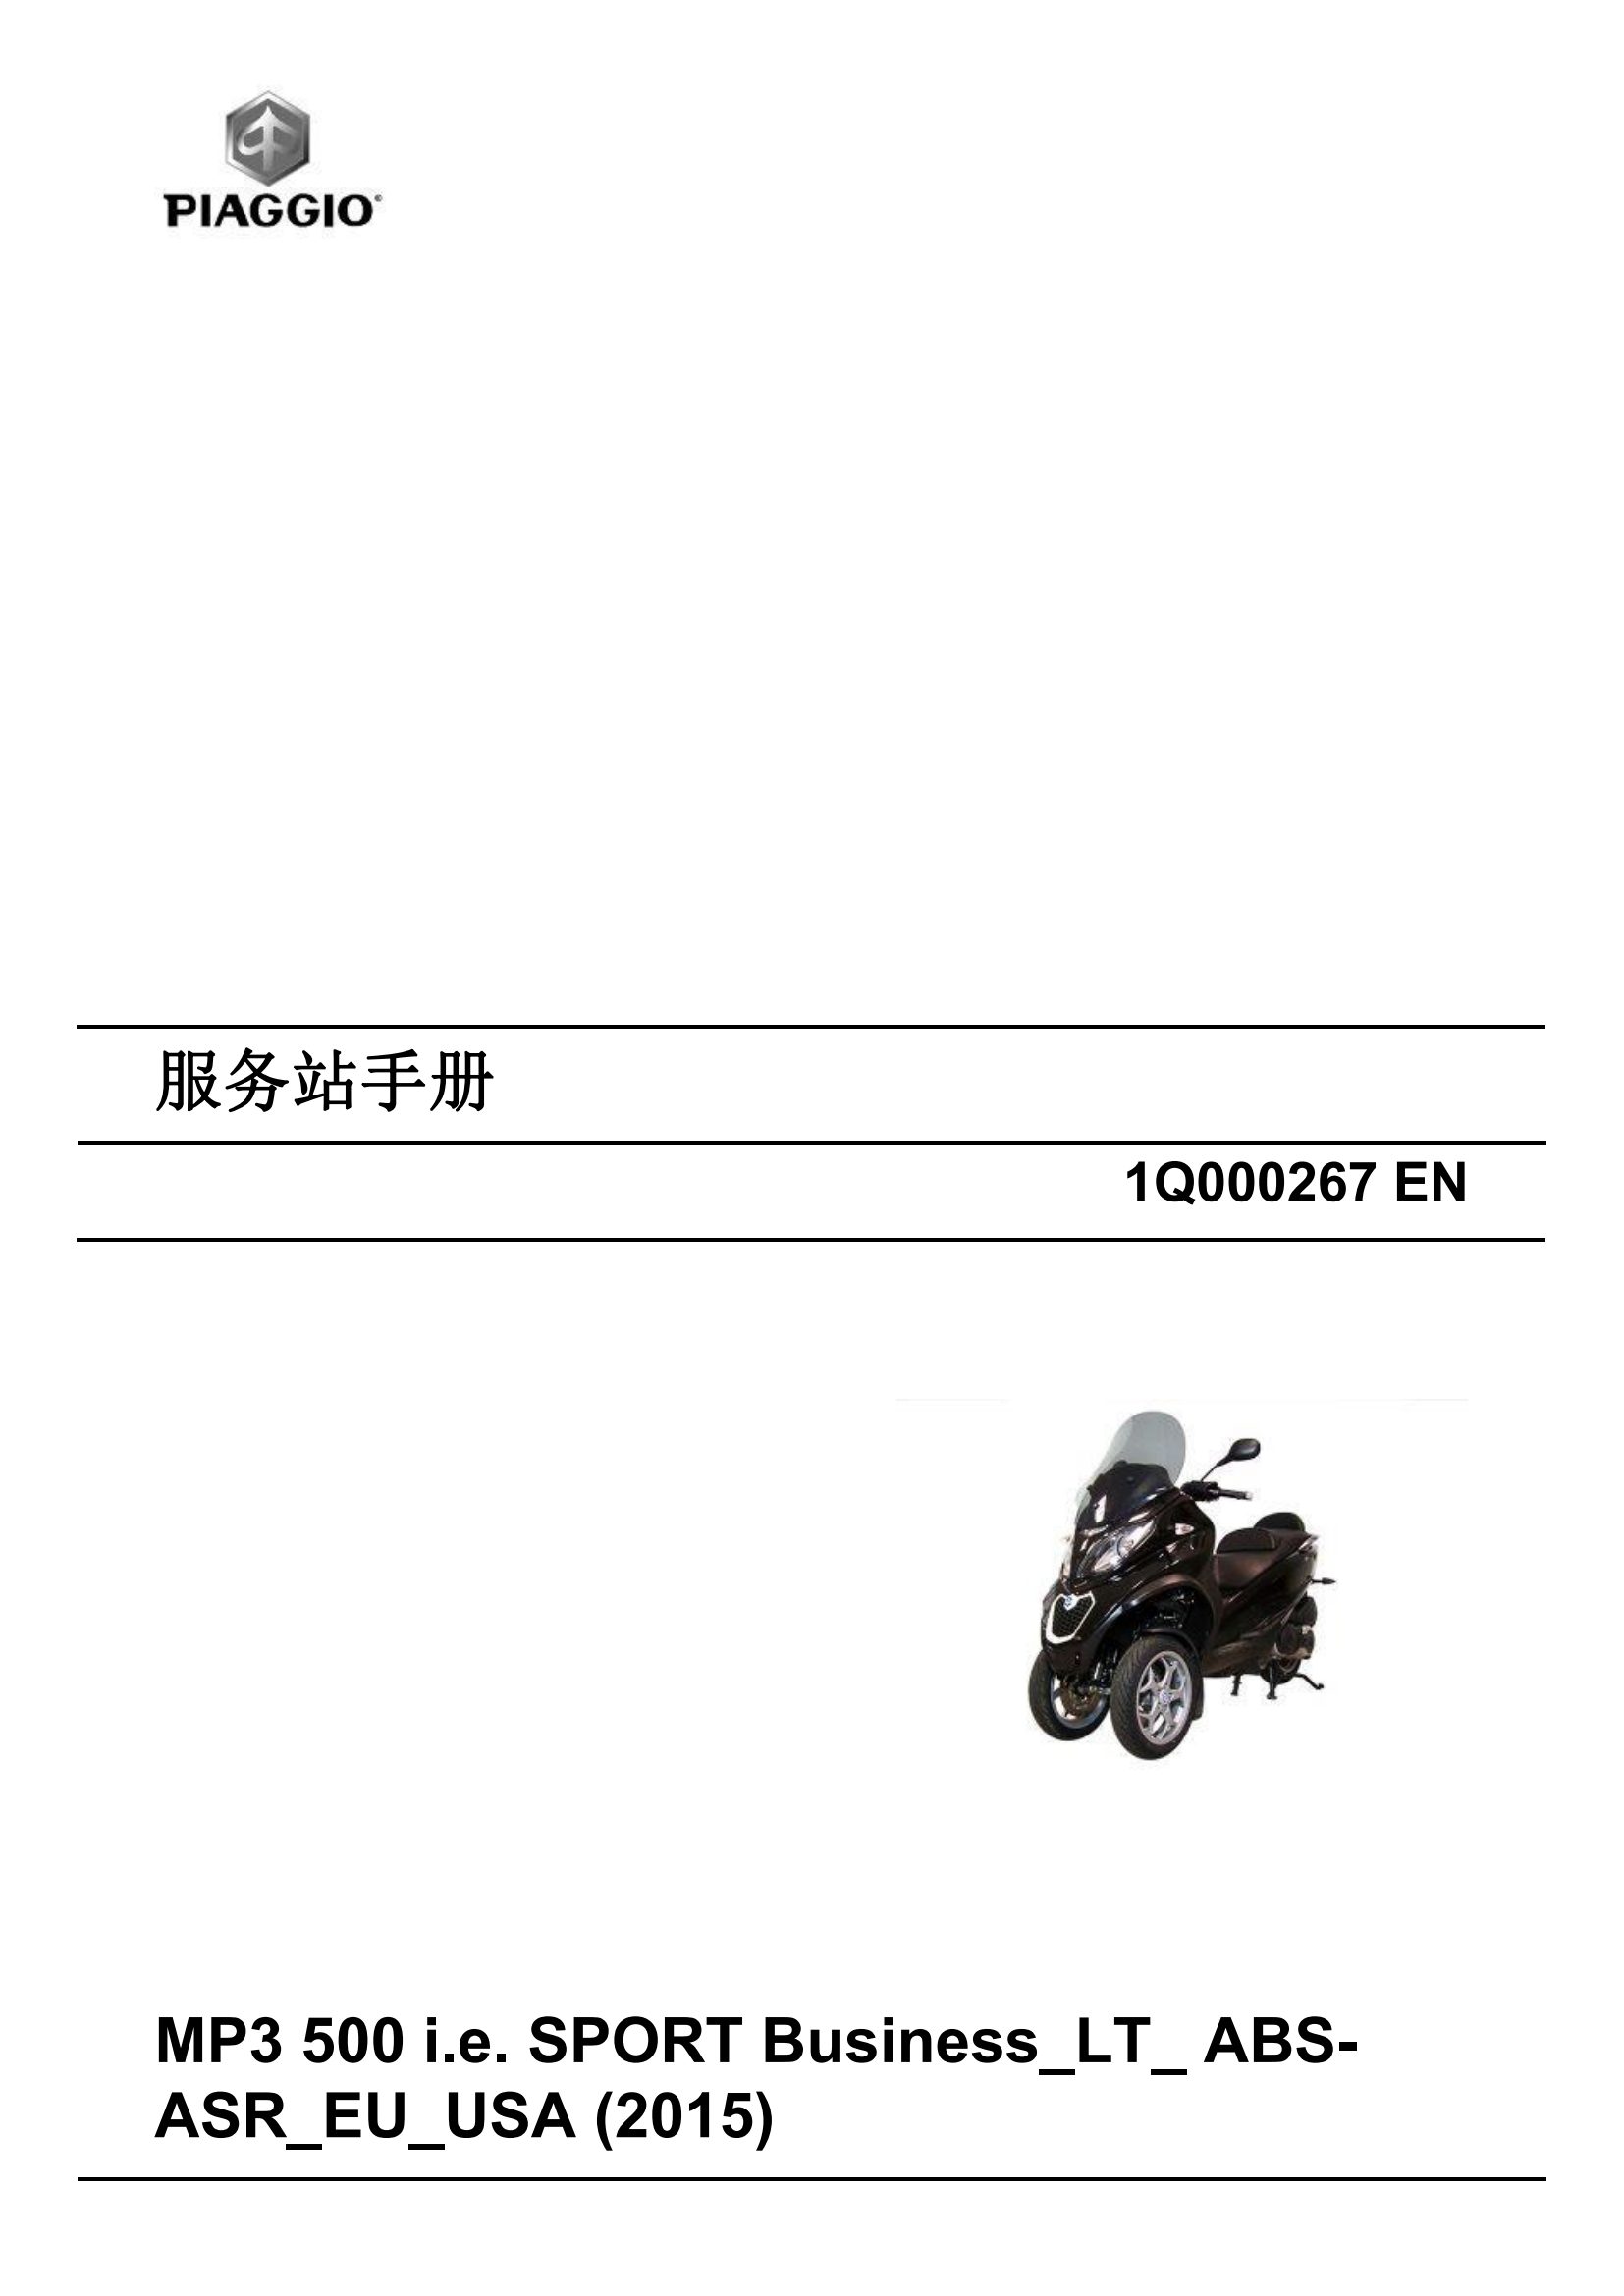 简体中文2015年比亚乔mp3 500维修手册MP3 500 i.e. SPORT Business维修手册插图